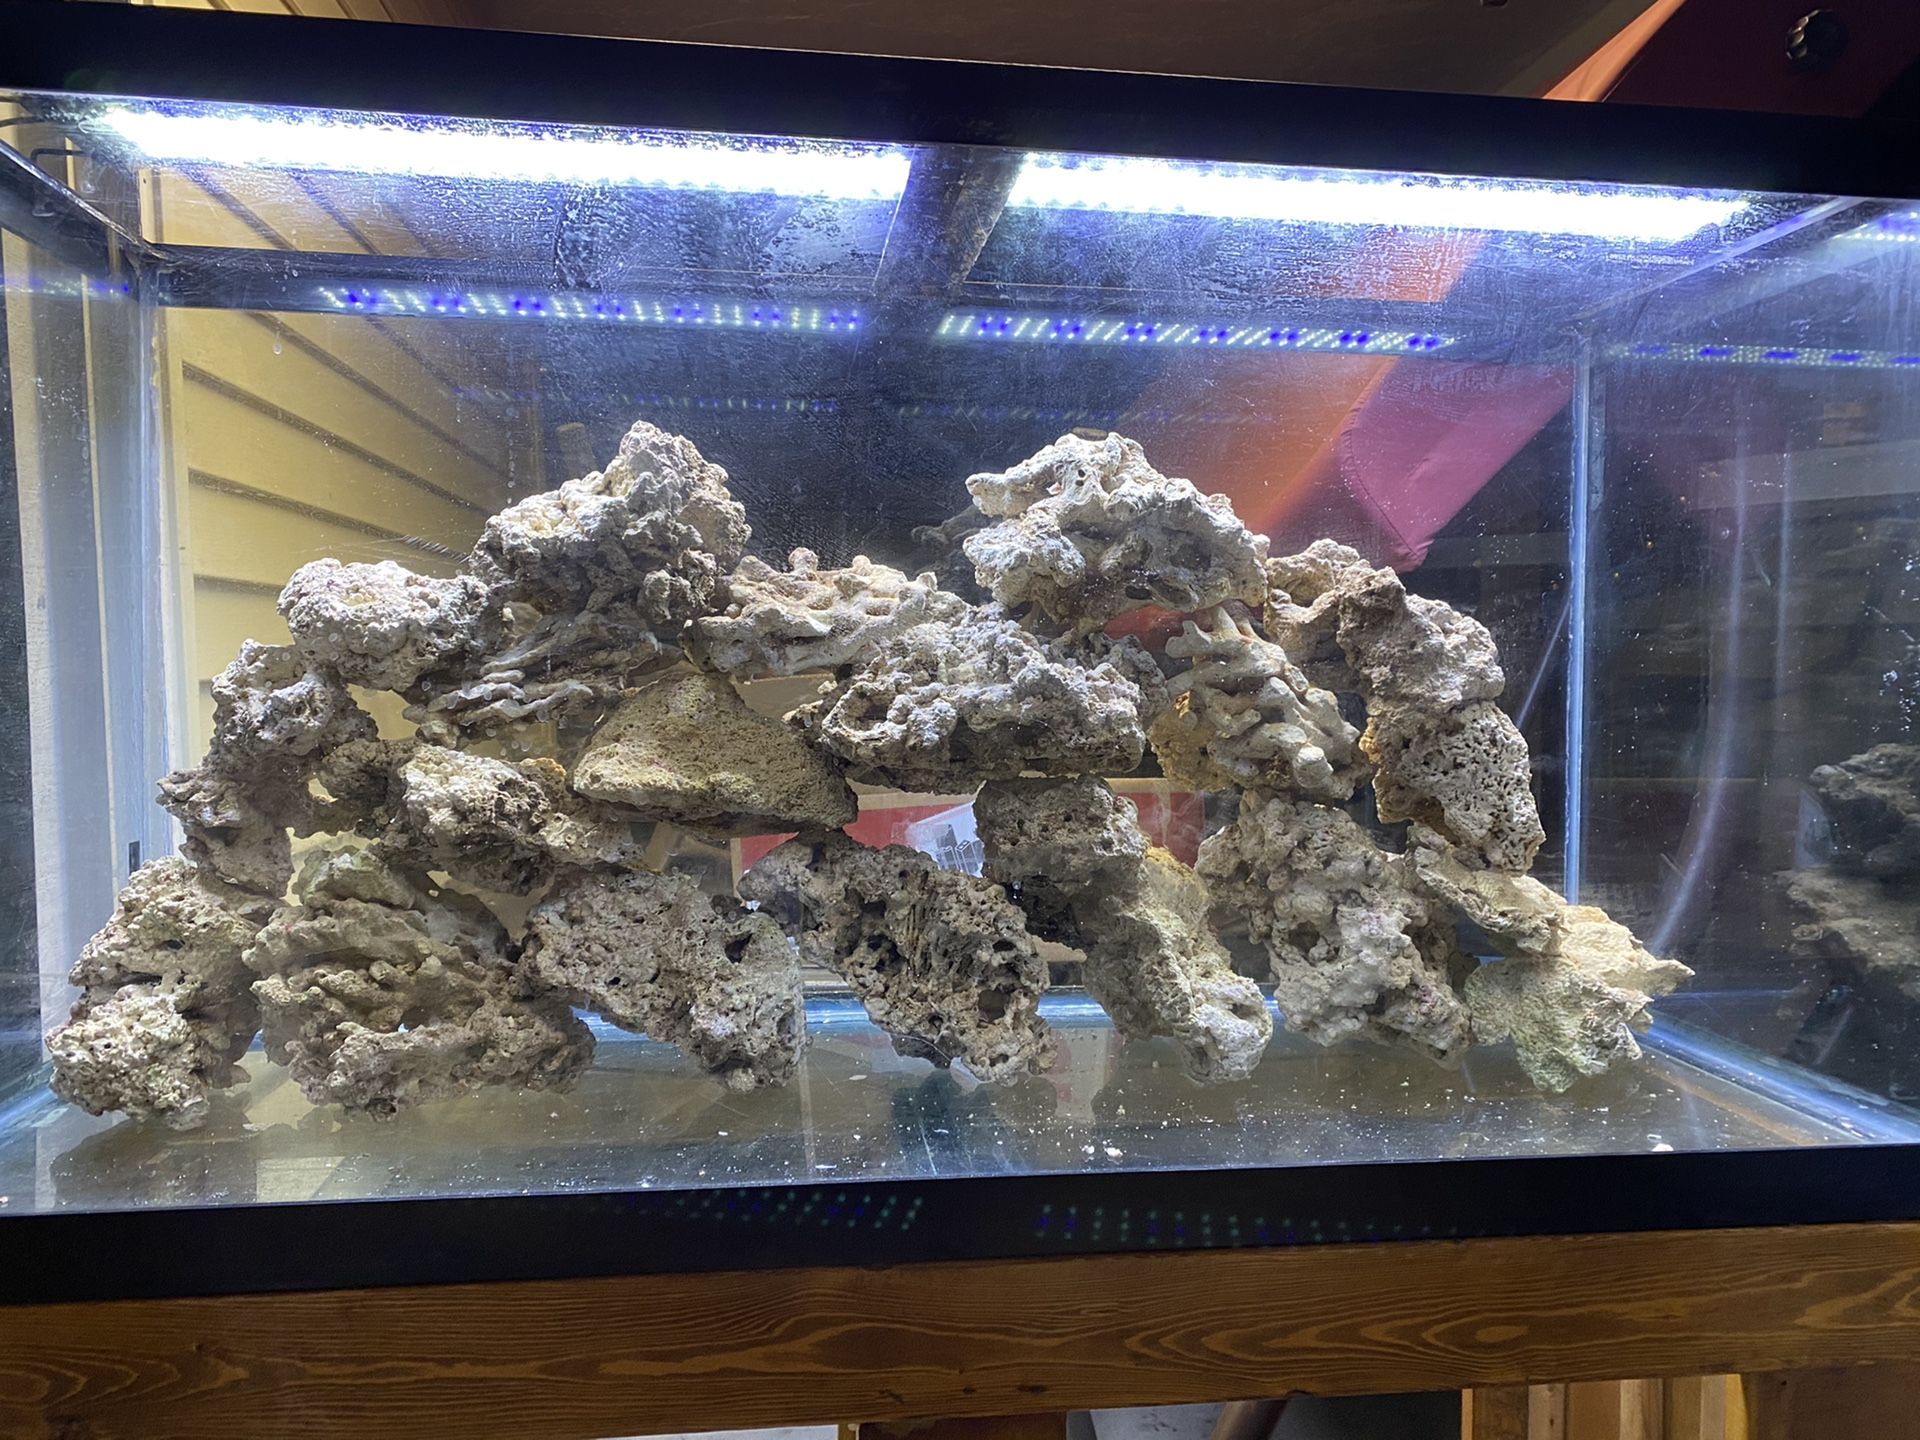 90 gallon aquarium set up